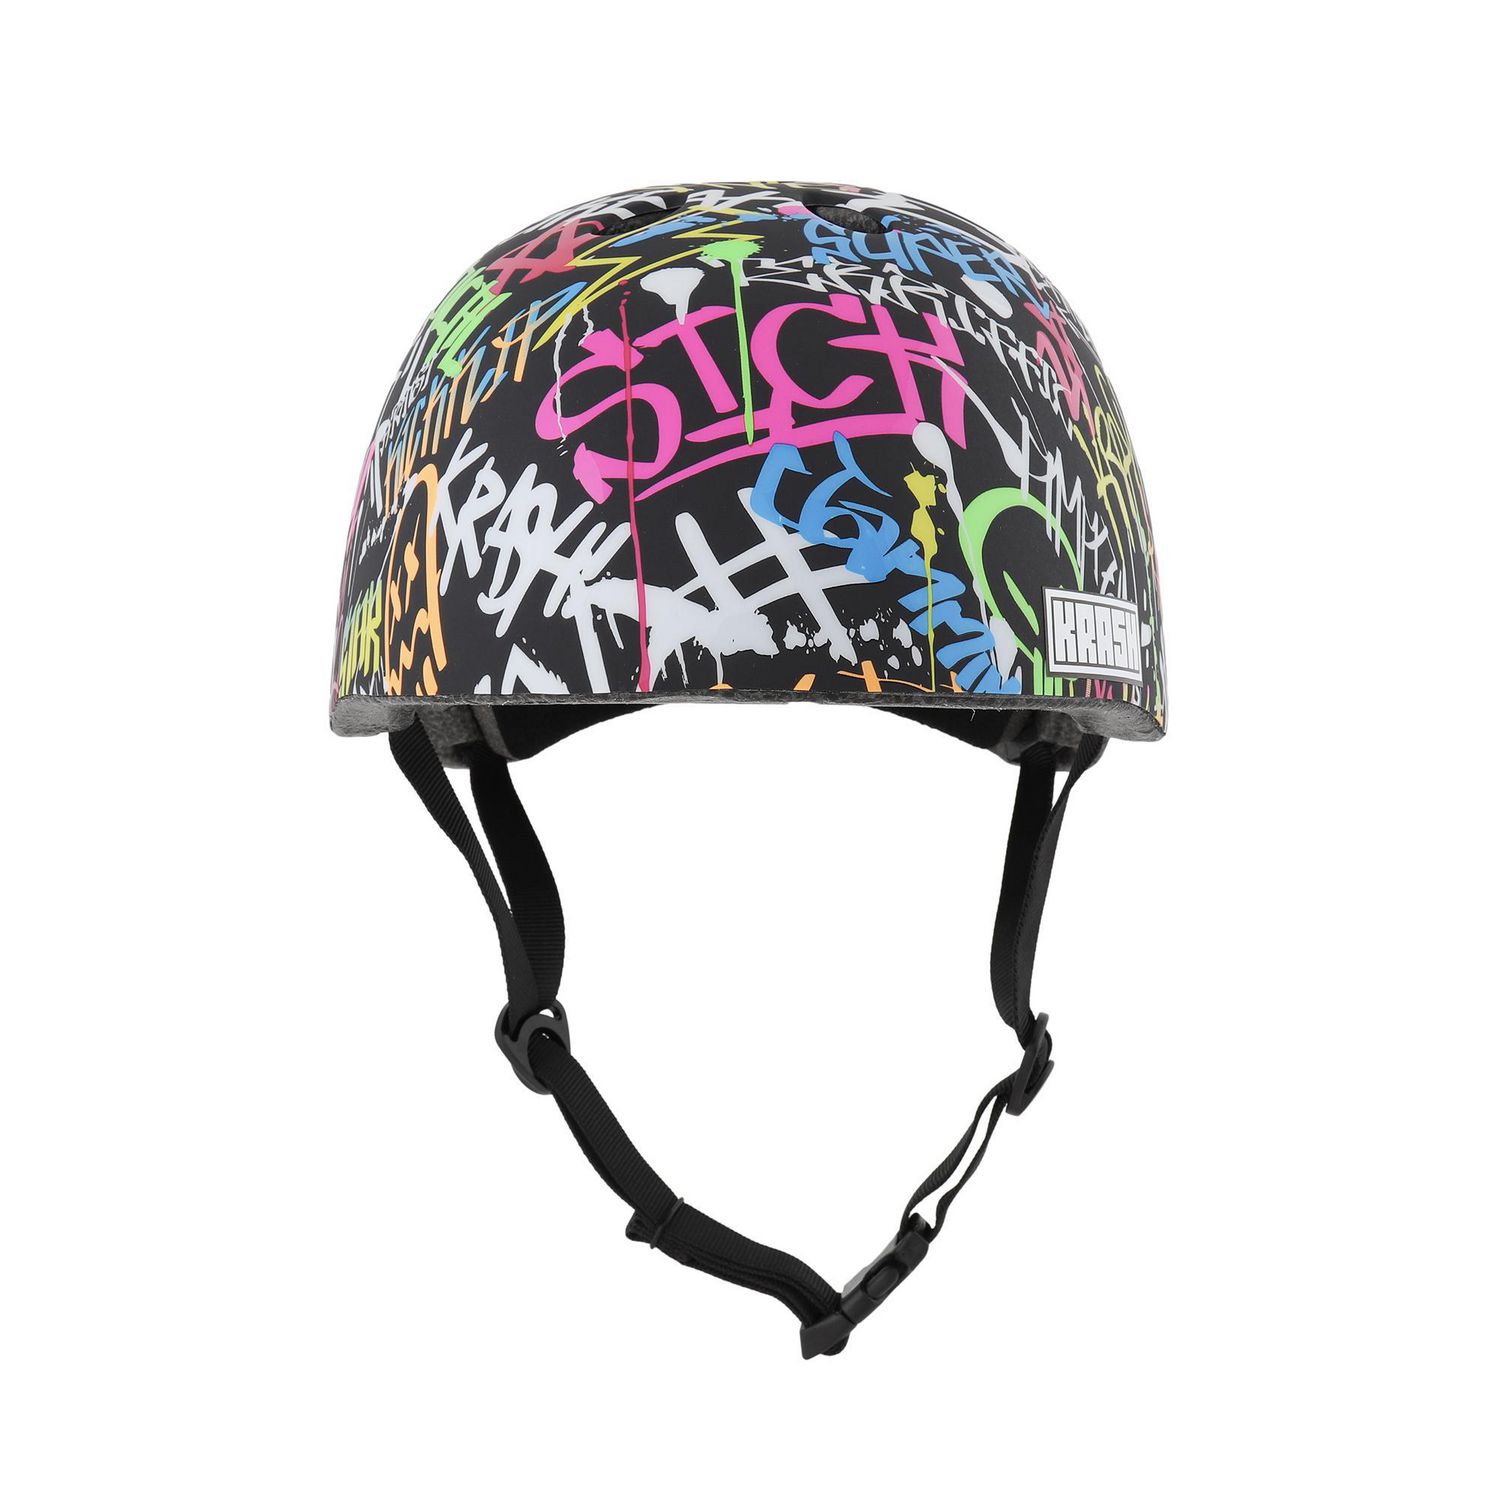 Krash Street Writer Multi-Sport Youth Helmet, Sizes 54-58 cm 